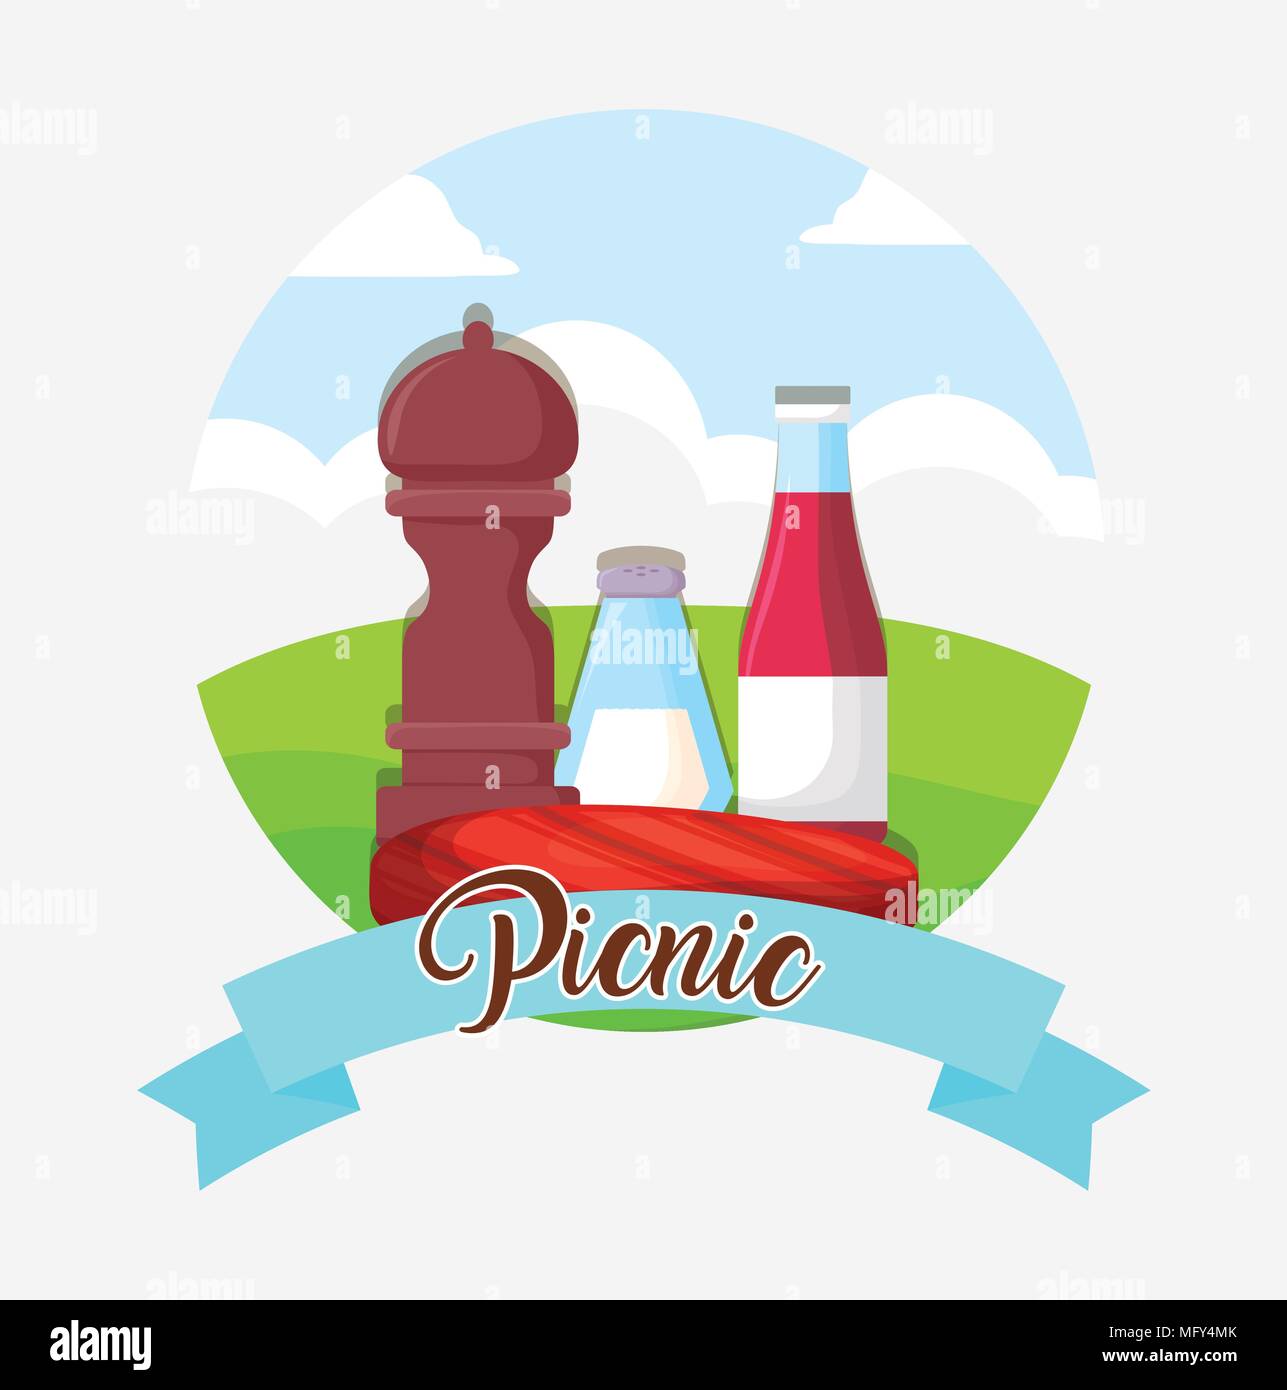 picnic emblem with steak and sauce bottles over landscape and white background, colorful design. vector illustration Stock Vector